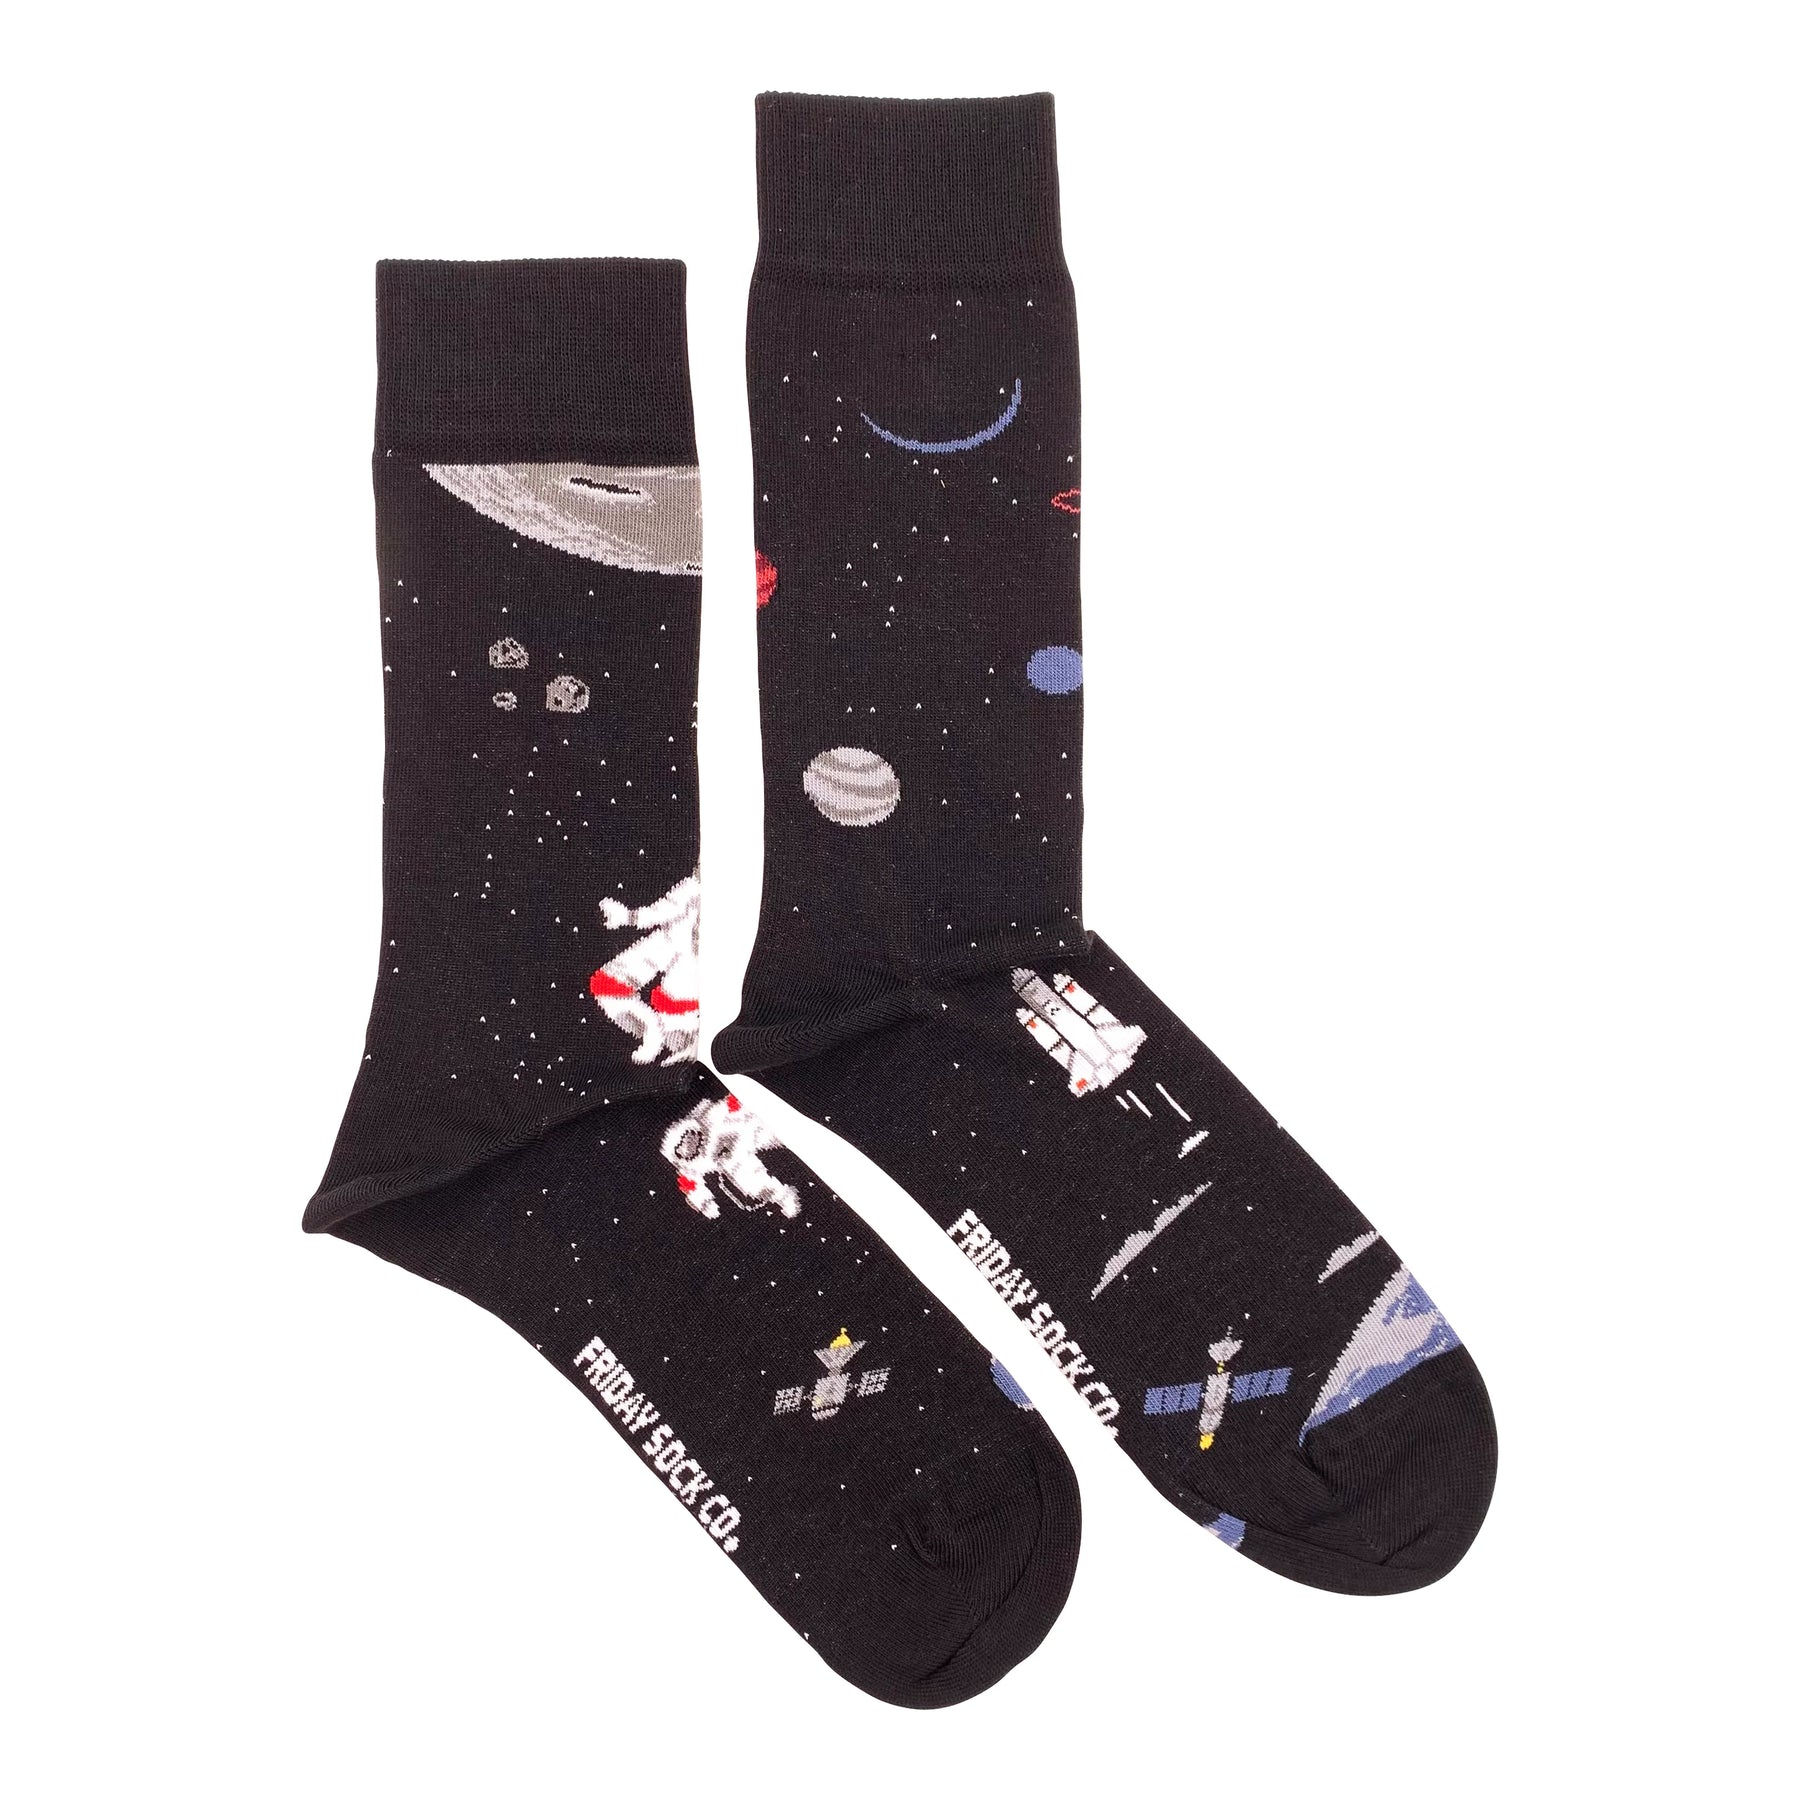 Friday Sock Co. - Men's Socks Space Scene Mismatched